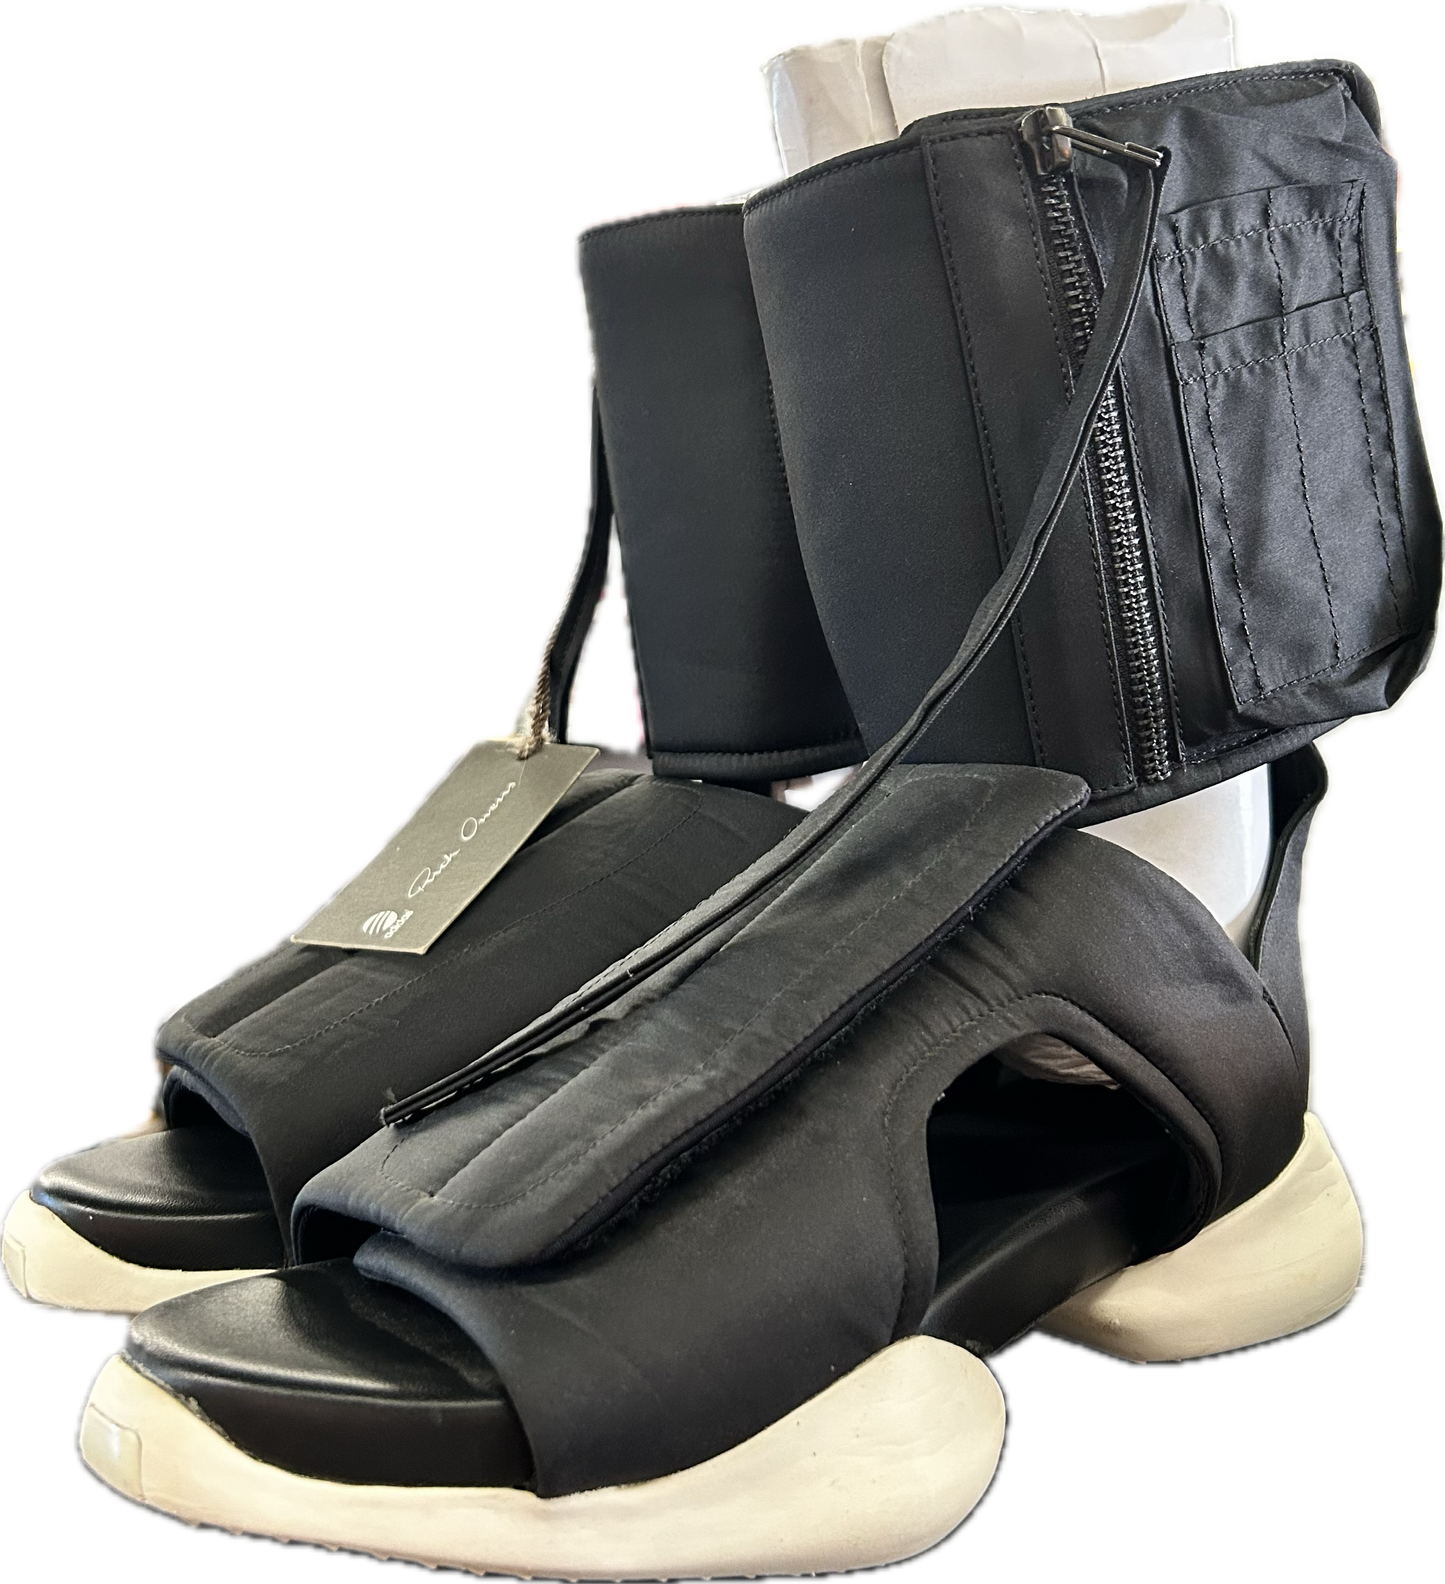 2015 Rick Owens X Adidas Cargo Sandal Sz 8